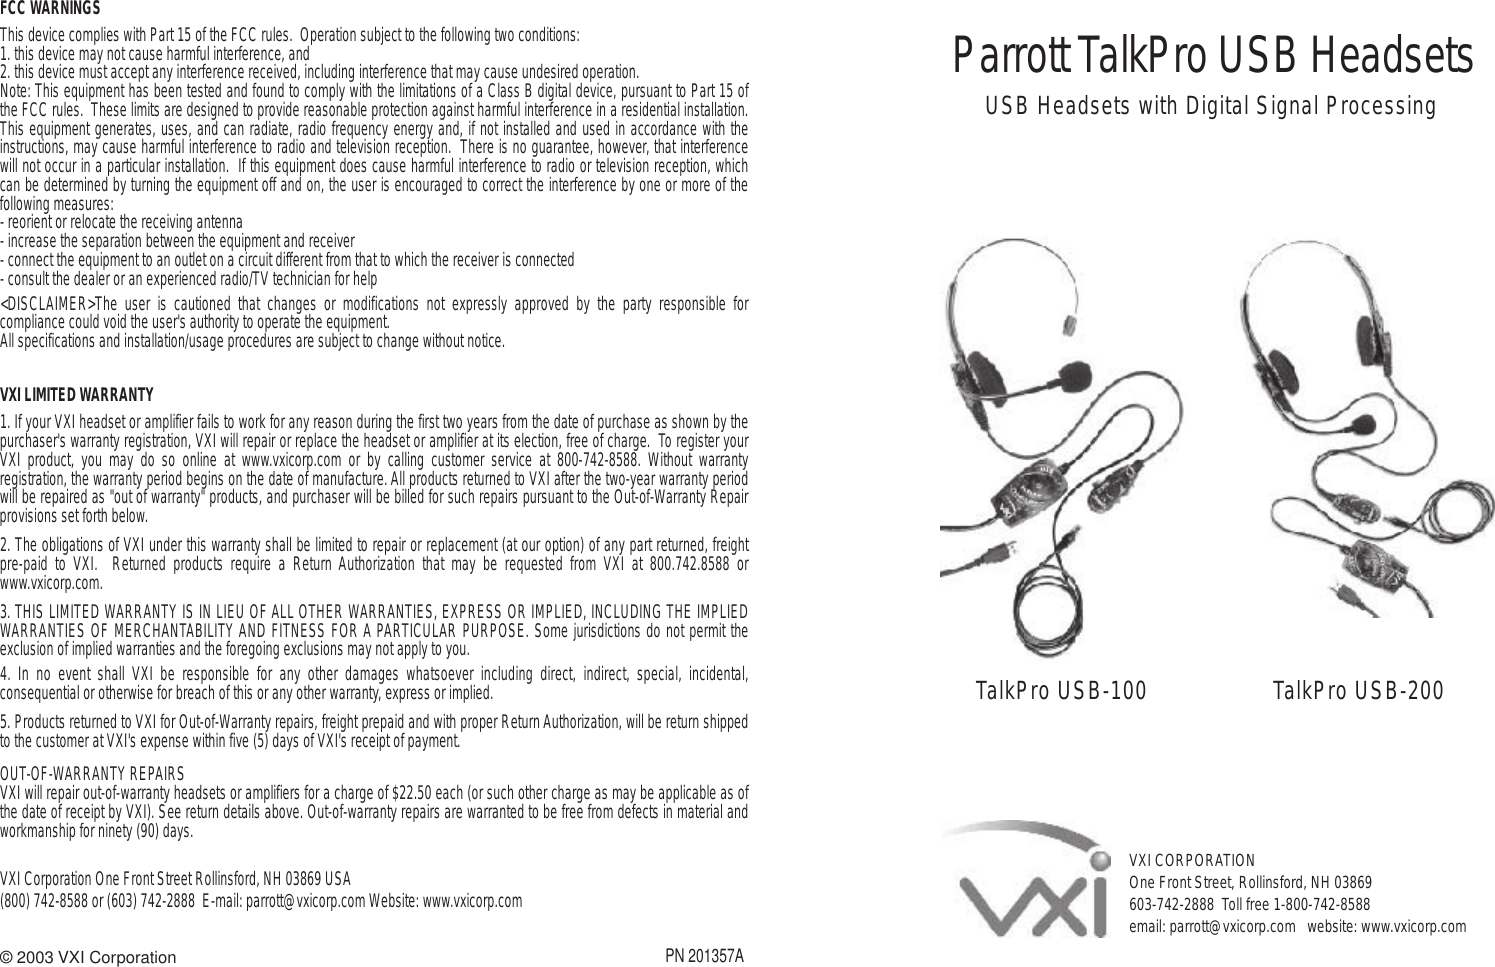 vxi parrot talkpro usb 100 users manual parrott